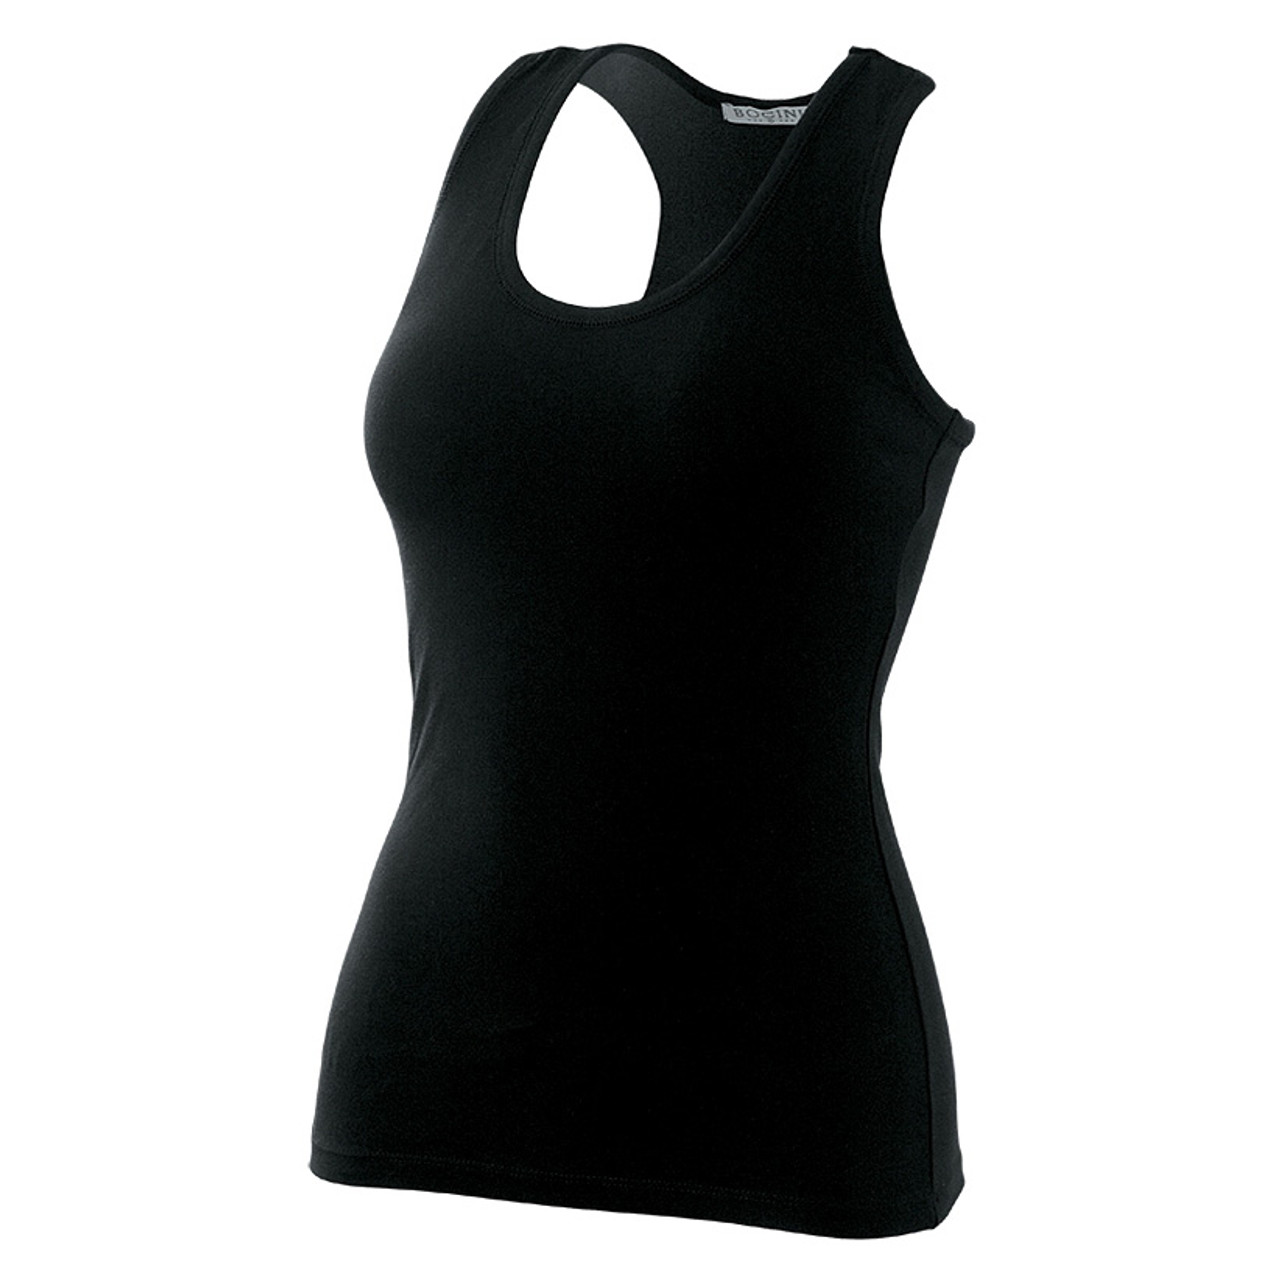 singlet stretch racer back | blank gym clothing | Plus Size Singlets